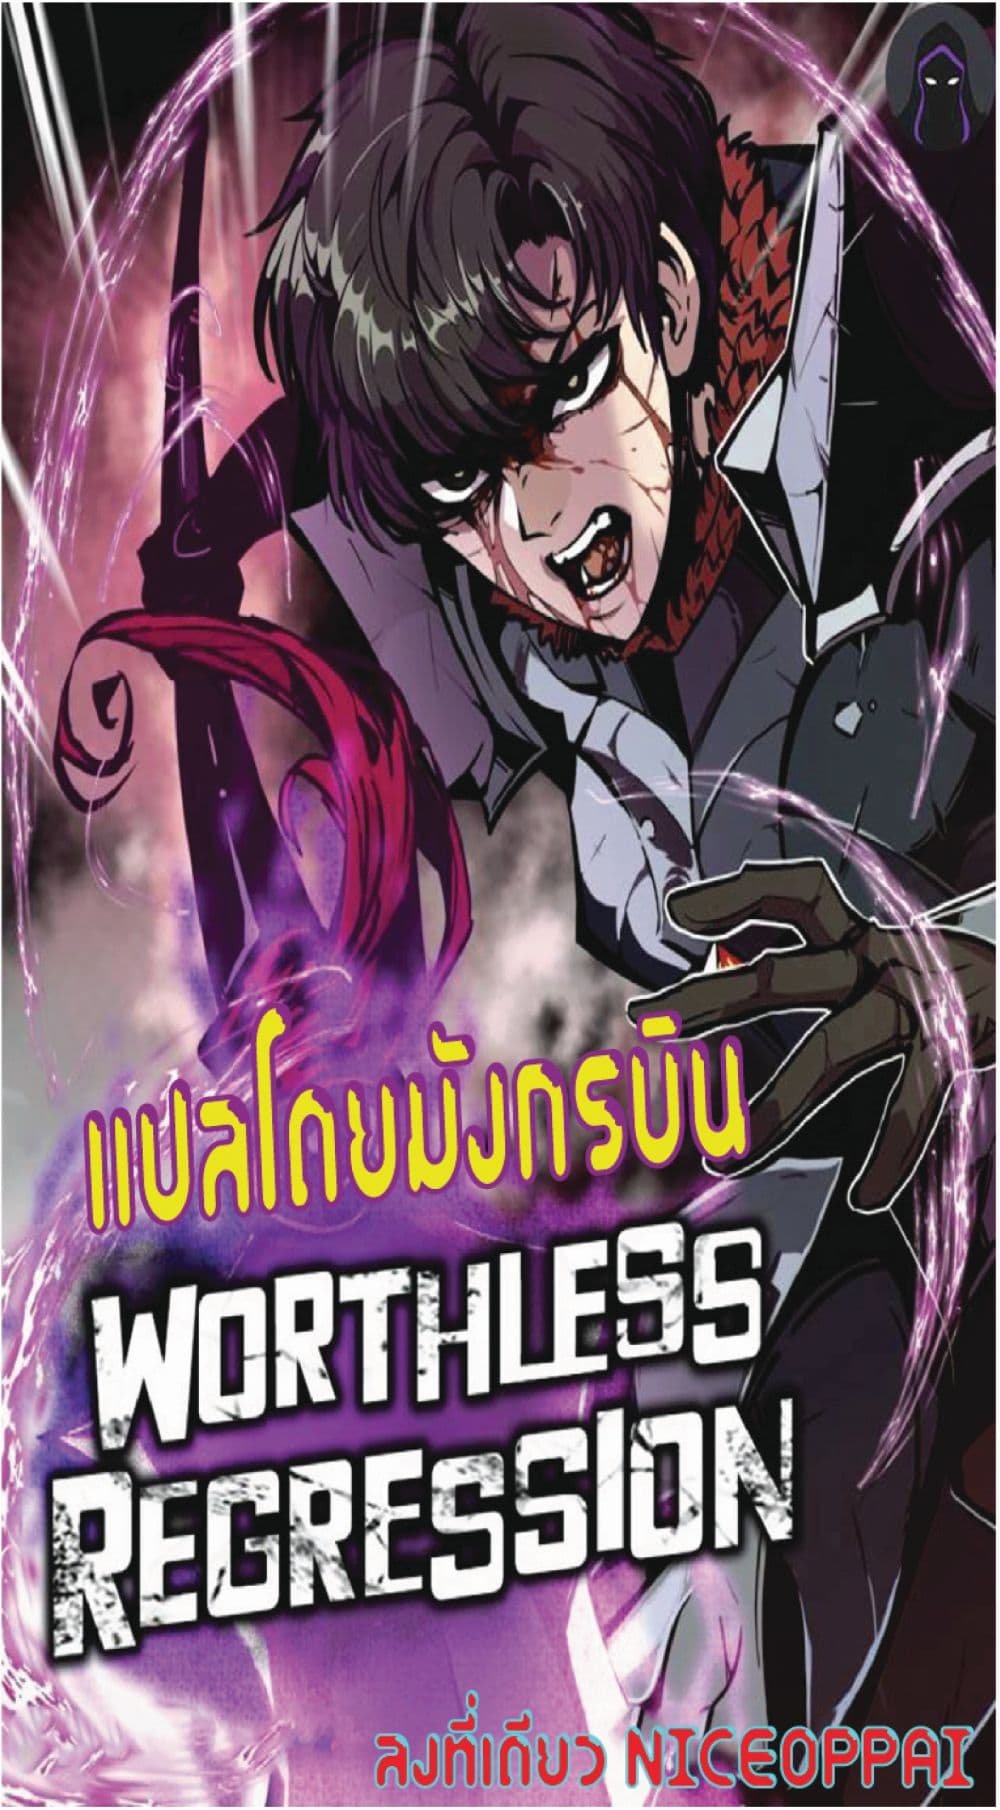 Worthless Regression15 01